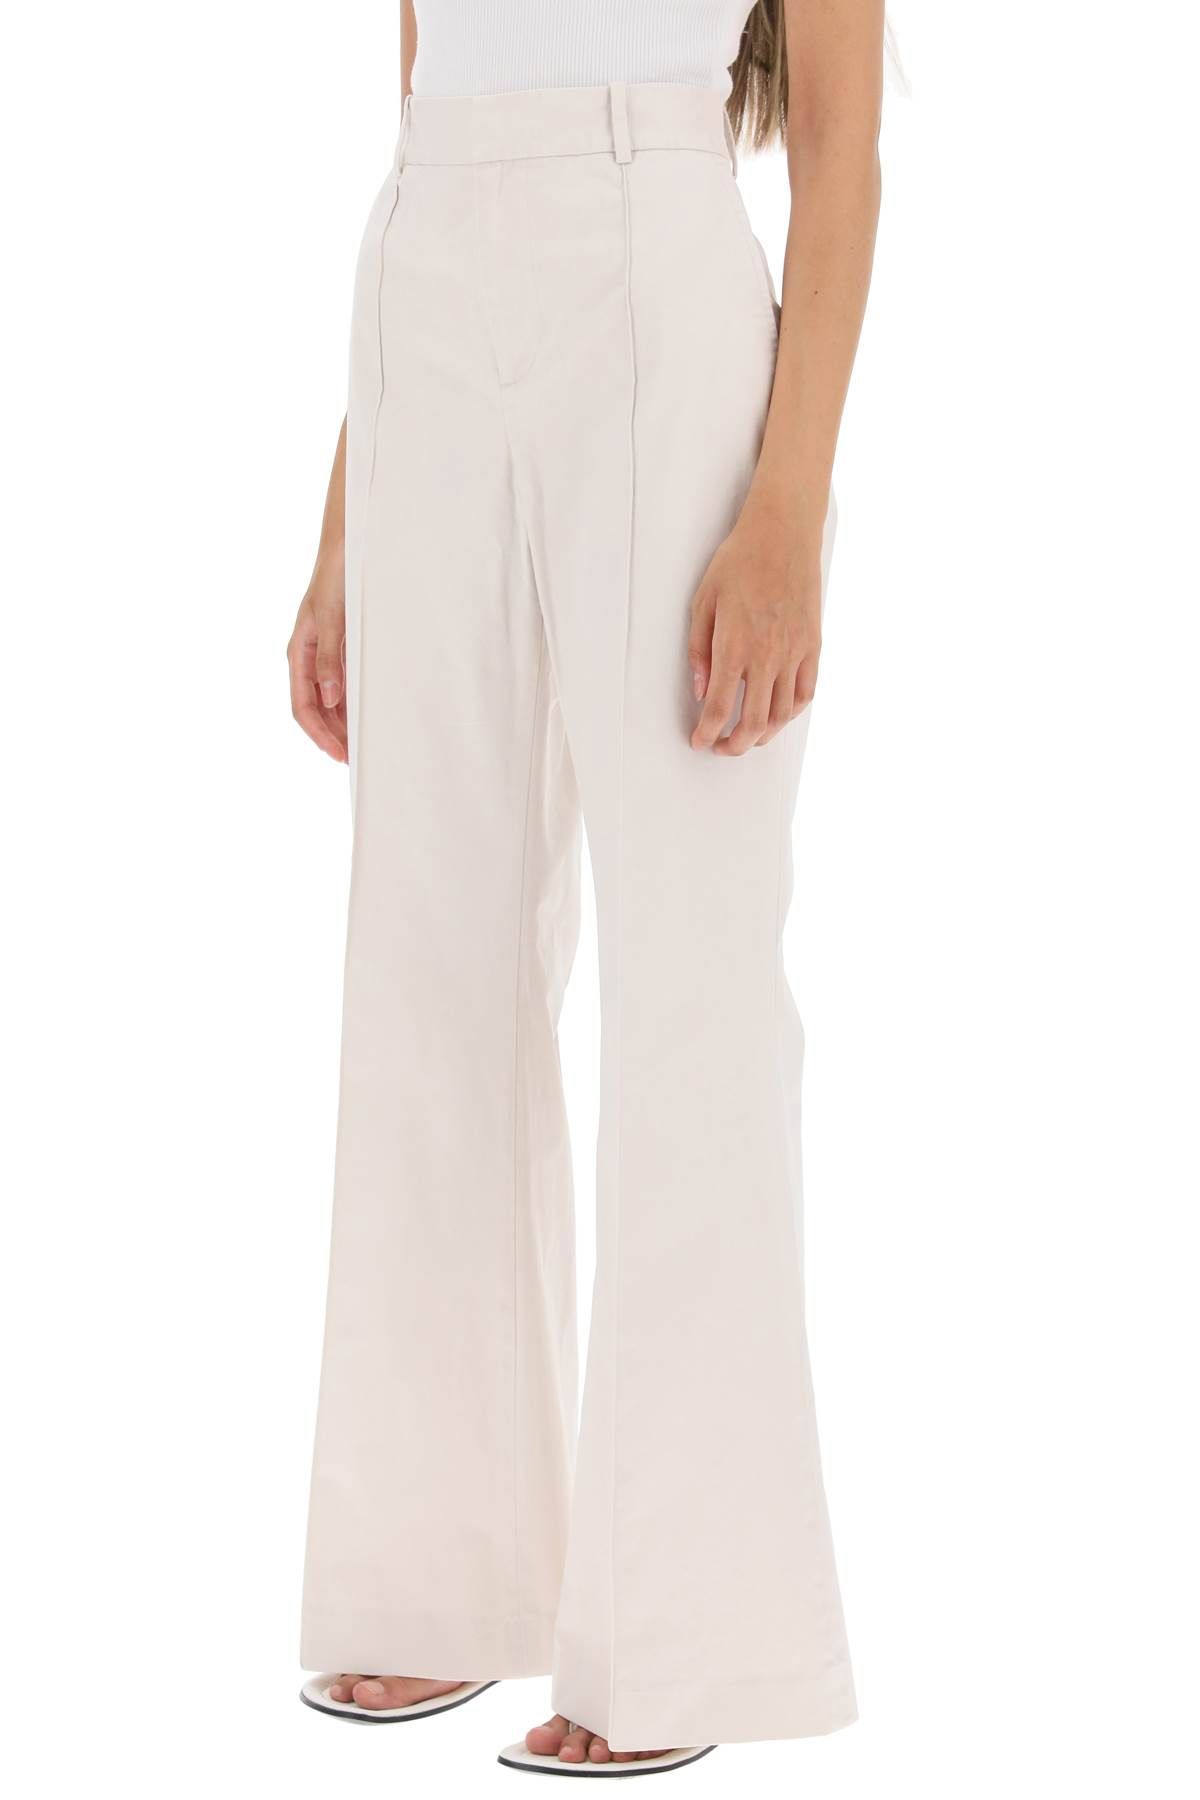 Shop Polo Ralph Lauren Cotton Bootcut Pants In White